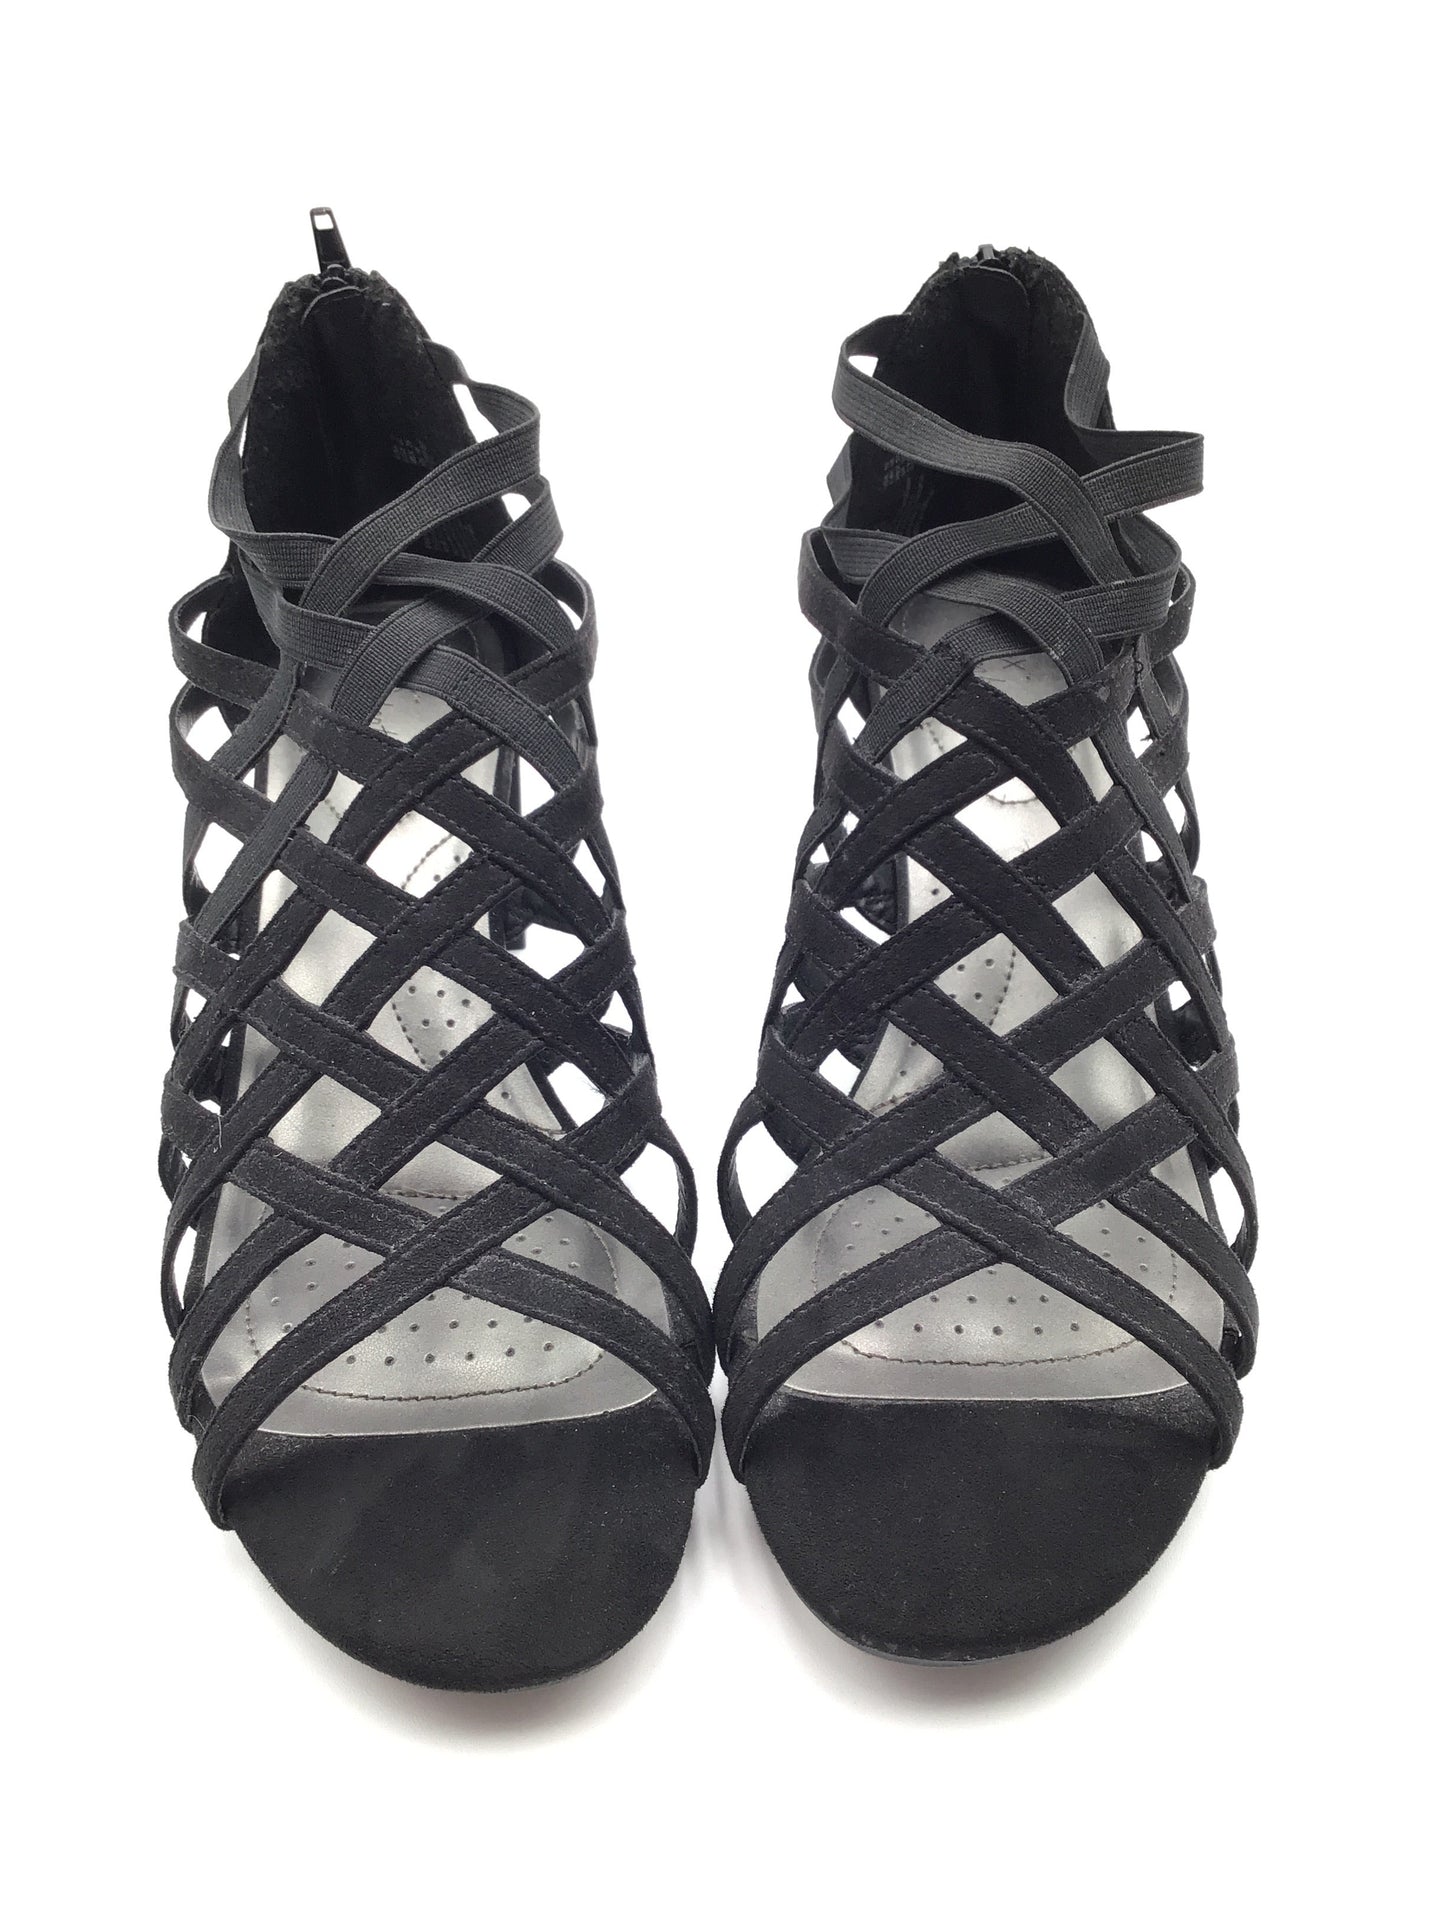 Black Shoes Heels Block Dexflex, Size 12